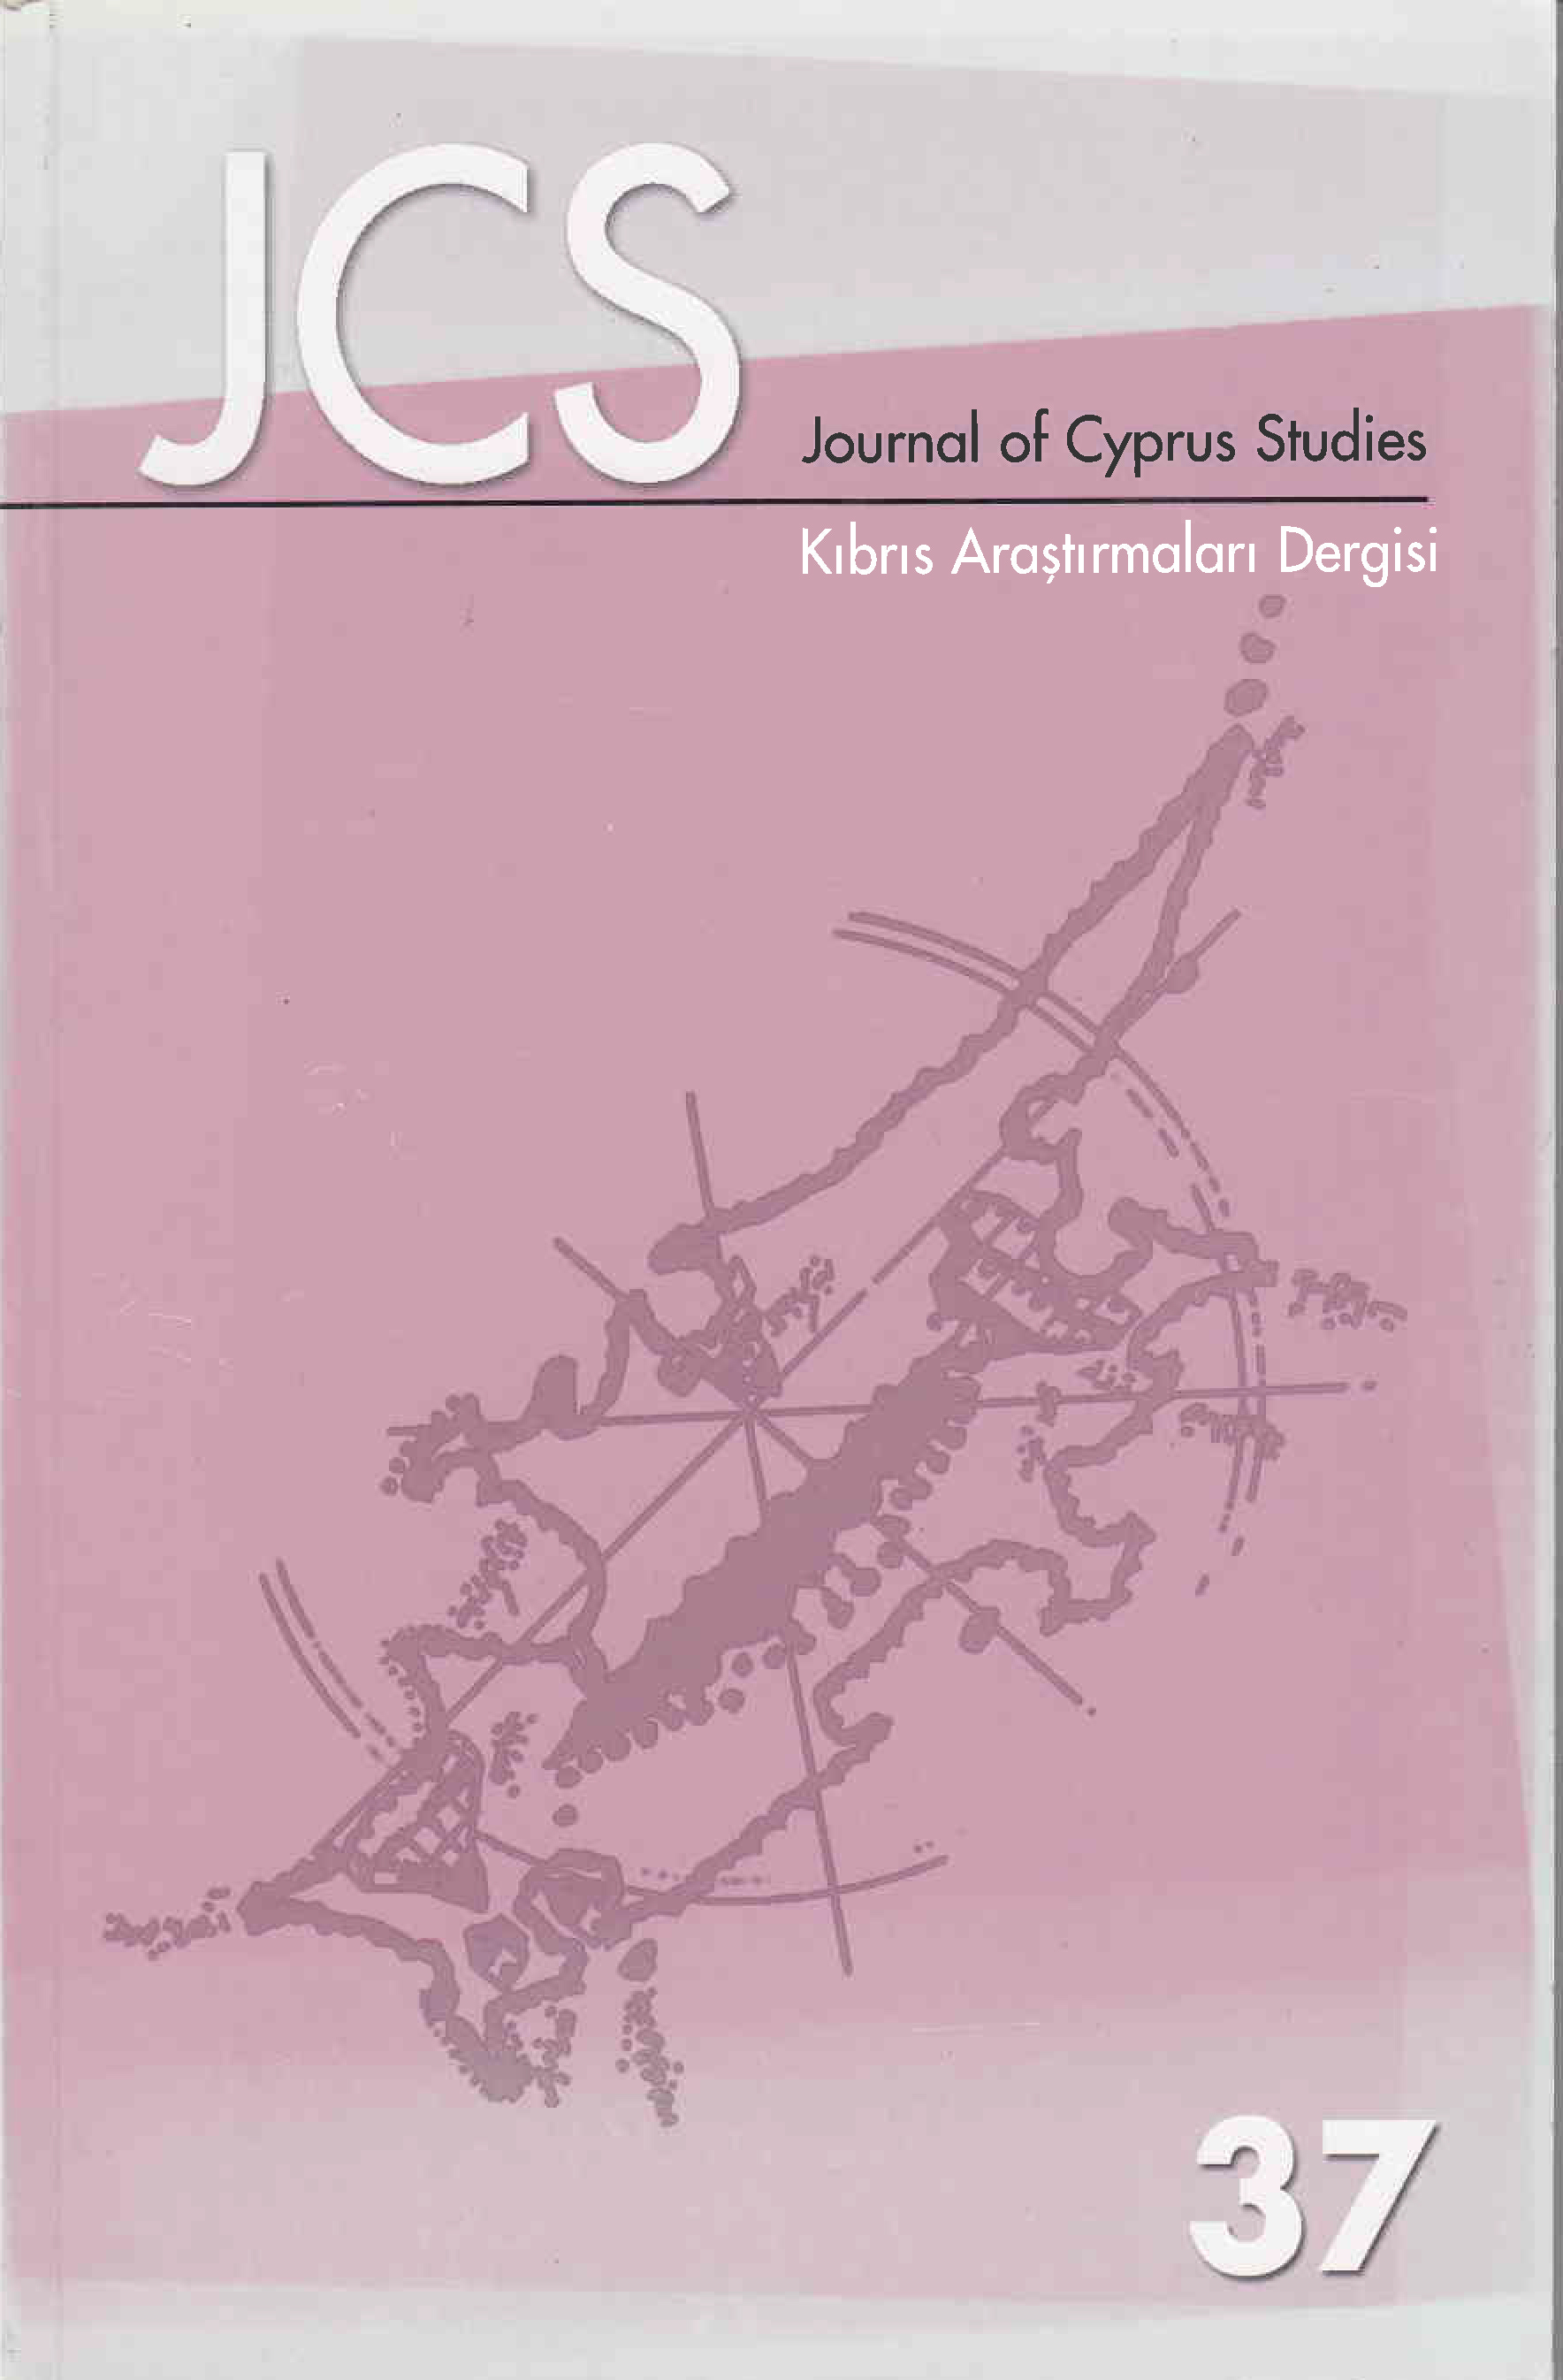 					View Vol. 15 No. 37 (2009): Journal of Cyprus Studies
				